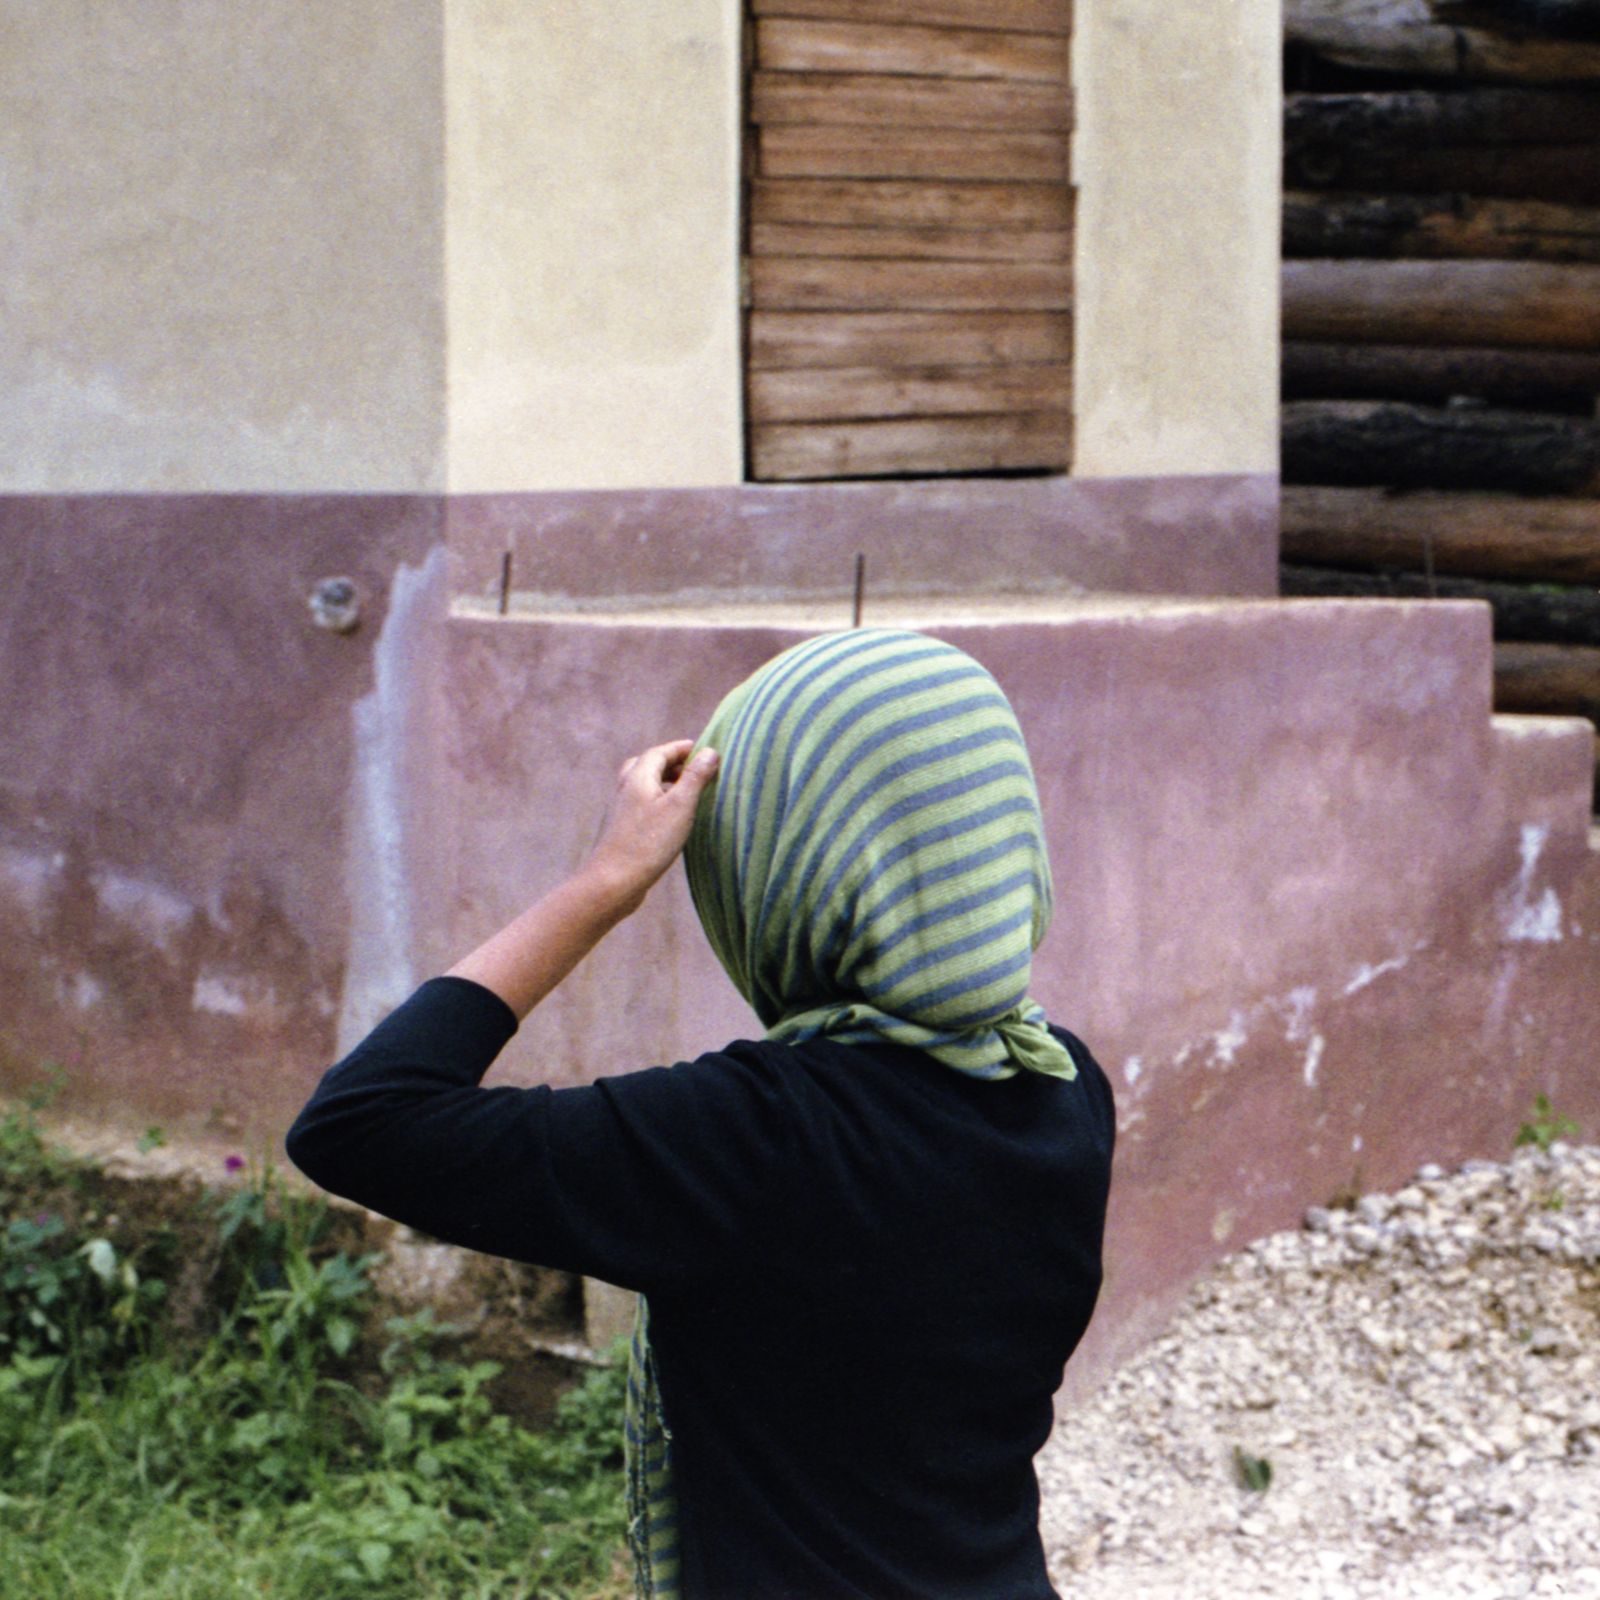 © Giulia Iacolutti - Rakma, born in 2006, fixing her hijab on the way to the mosque.